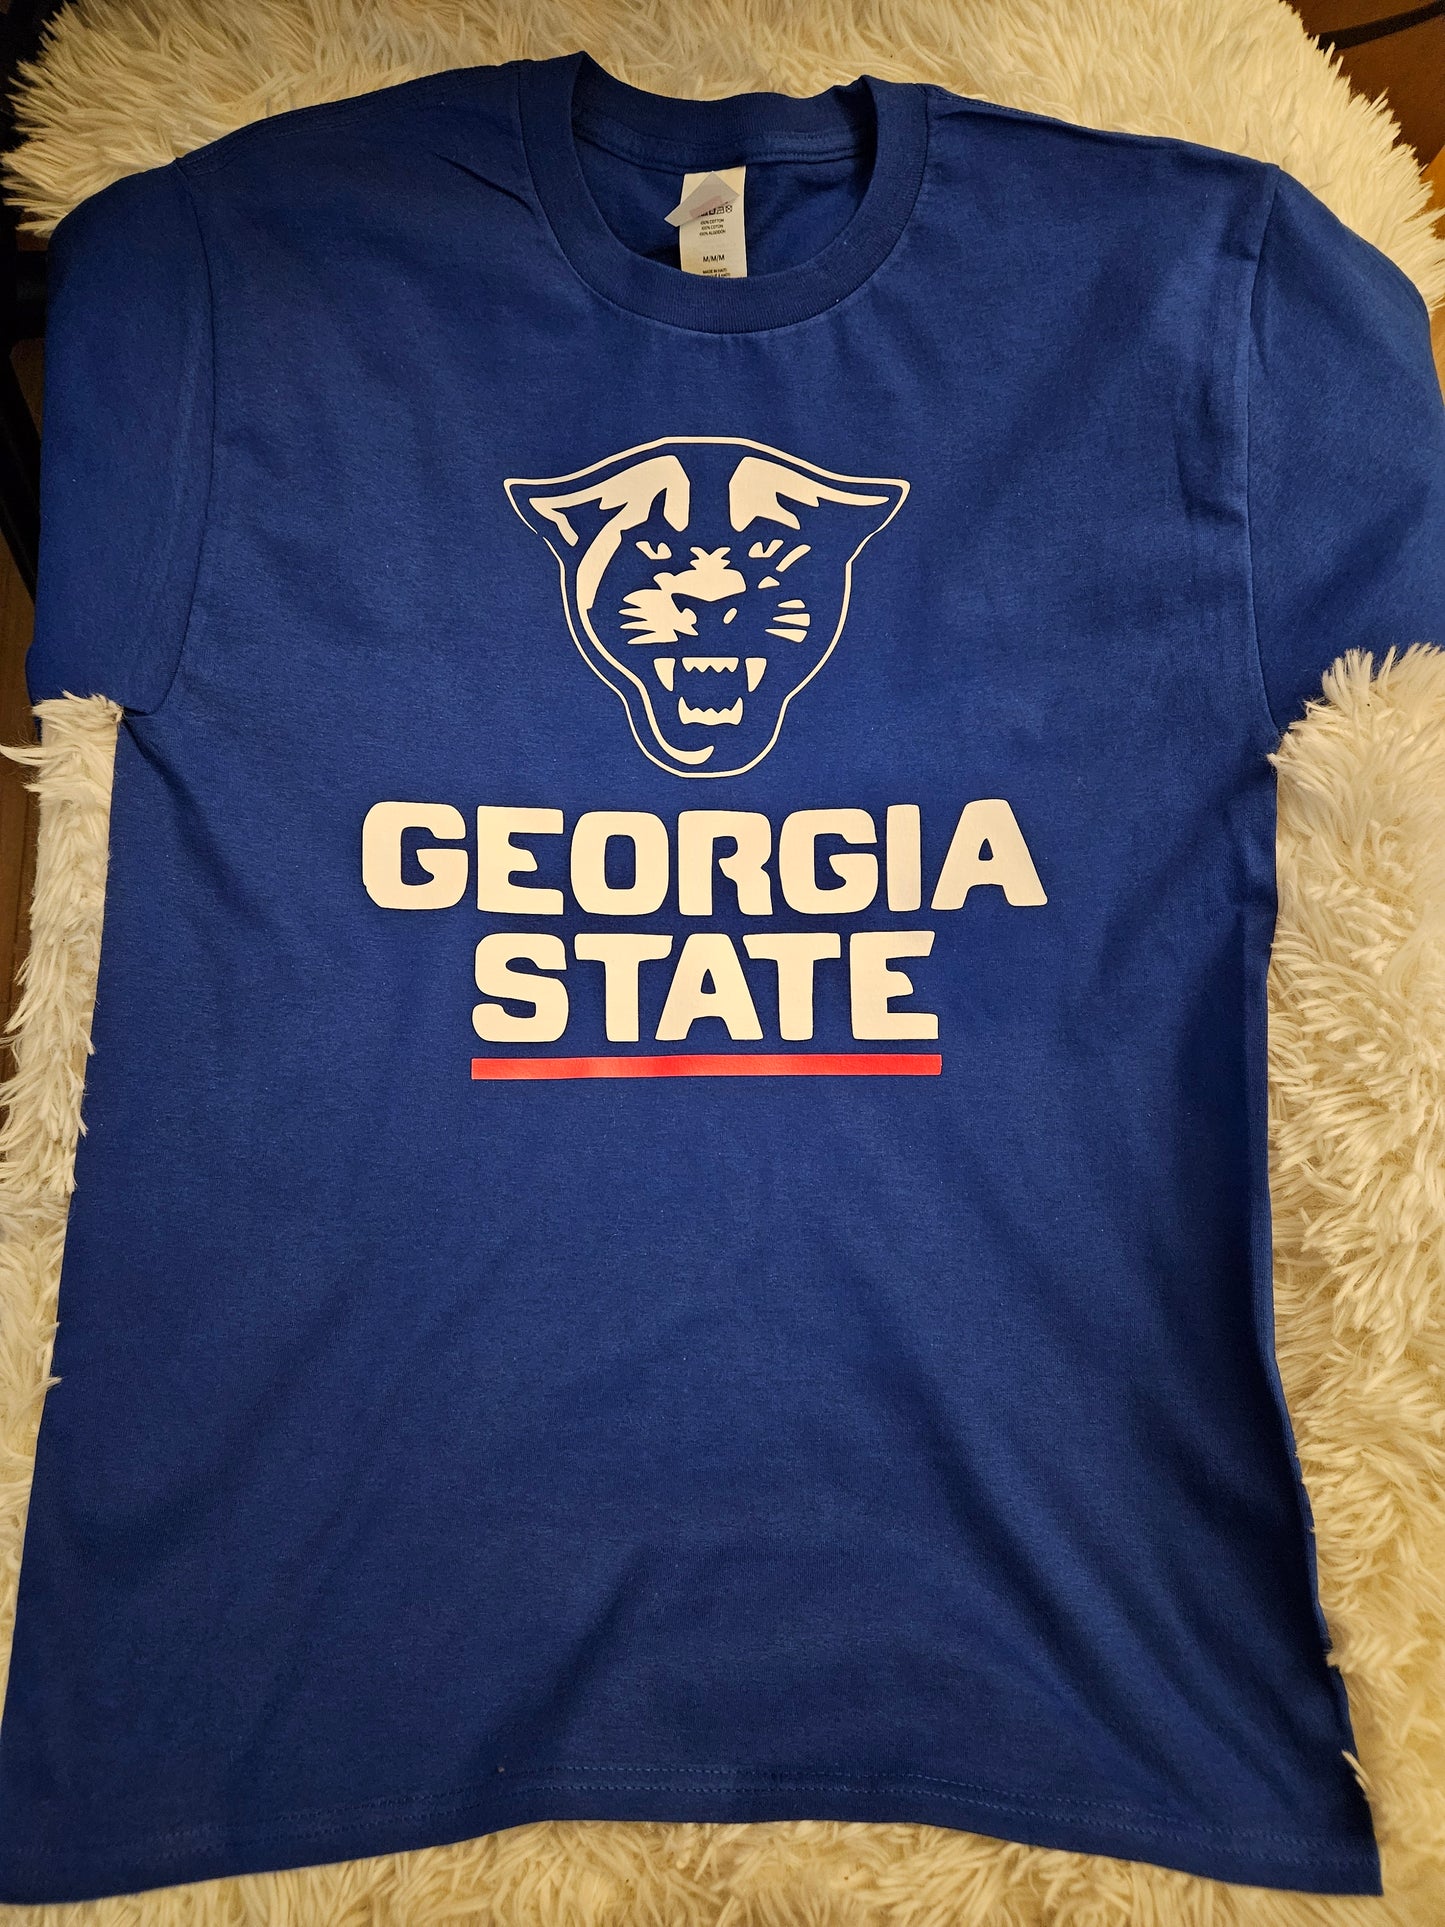 Georgia State Apparel